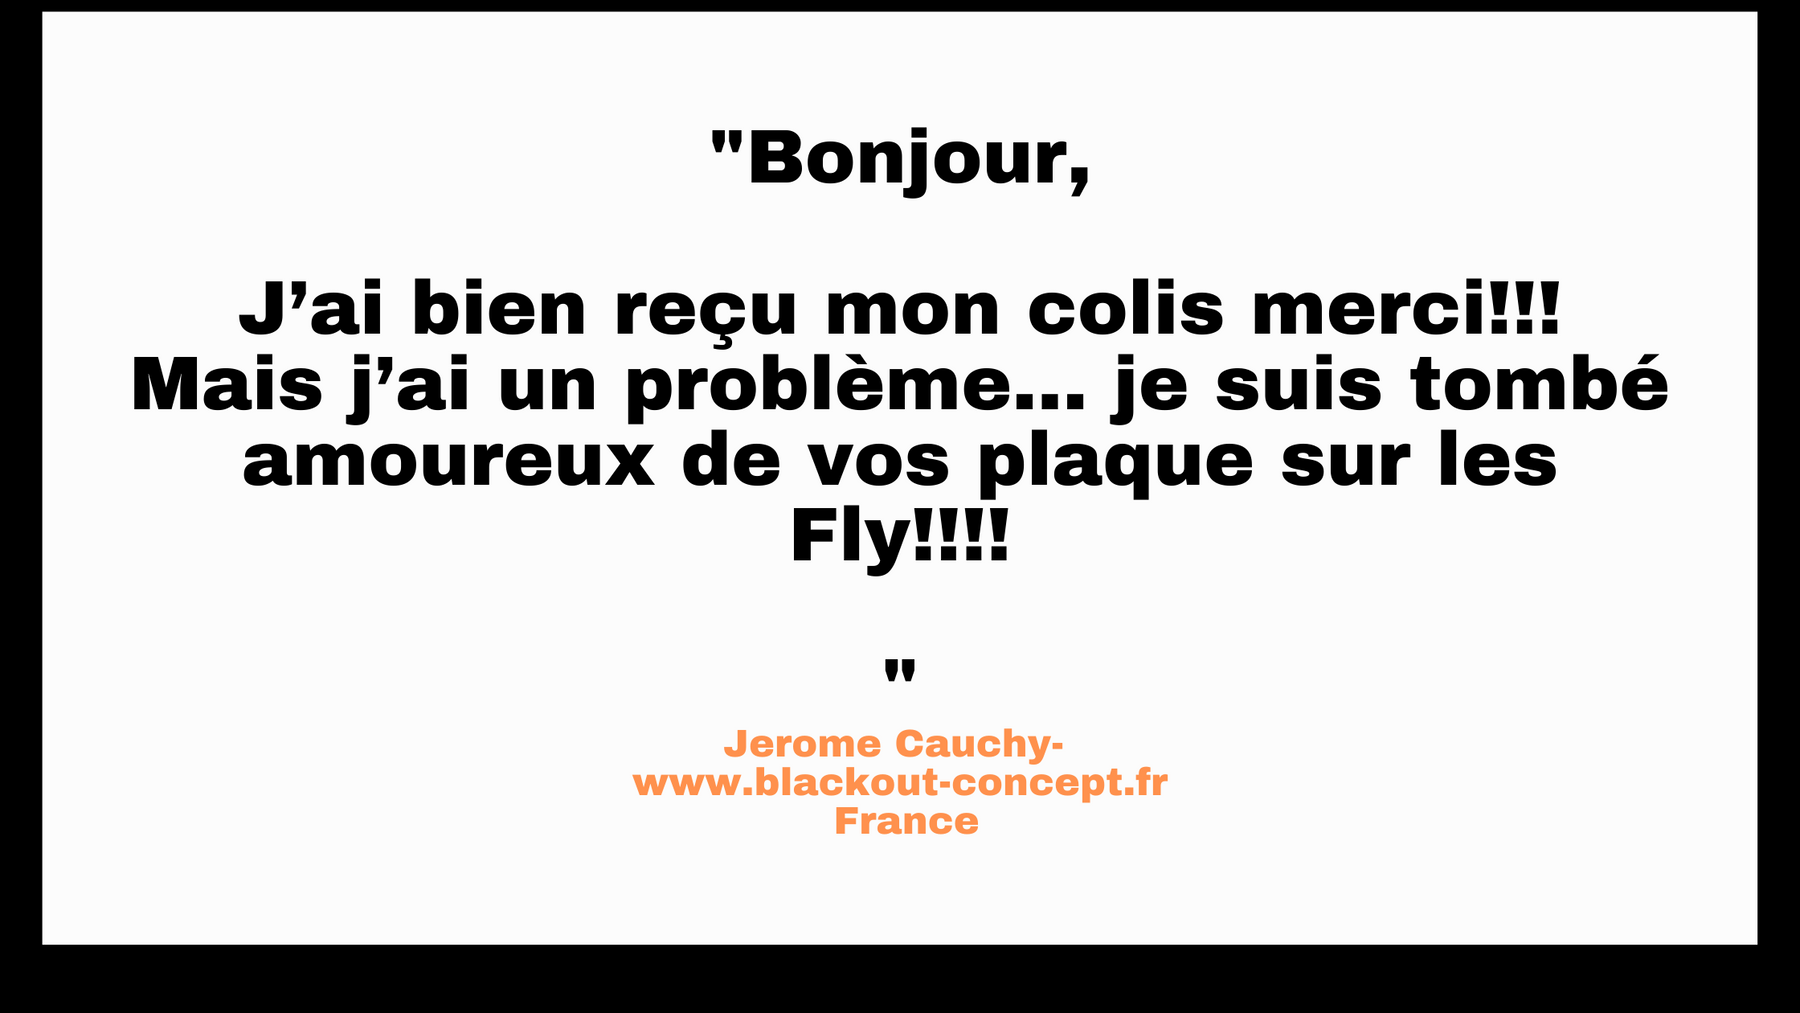 Jerome Cauchy - www.blackout-concept.fr